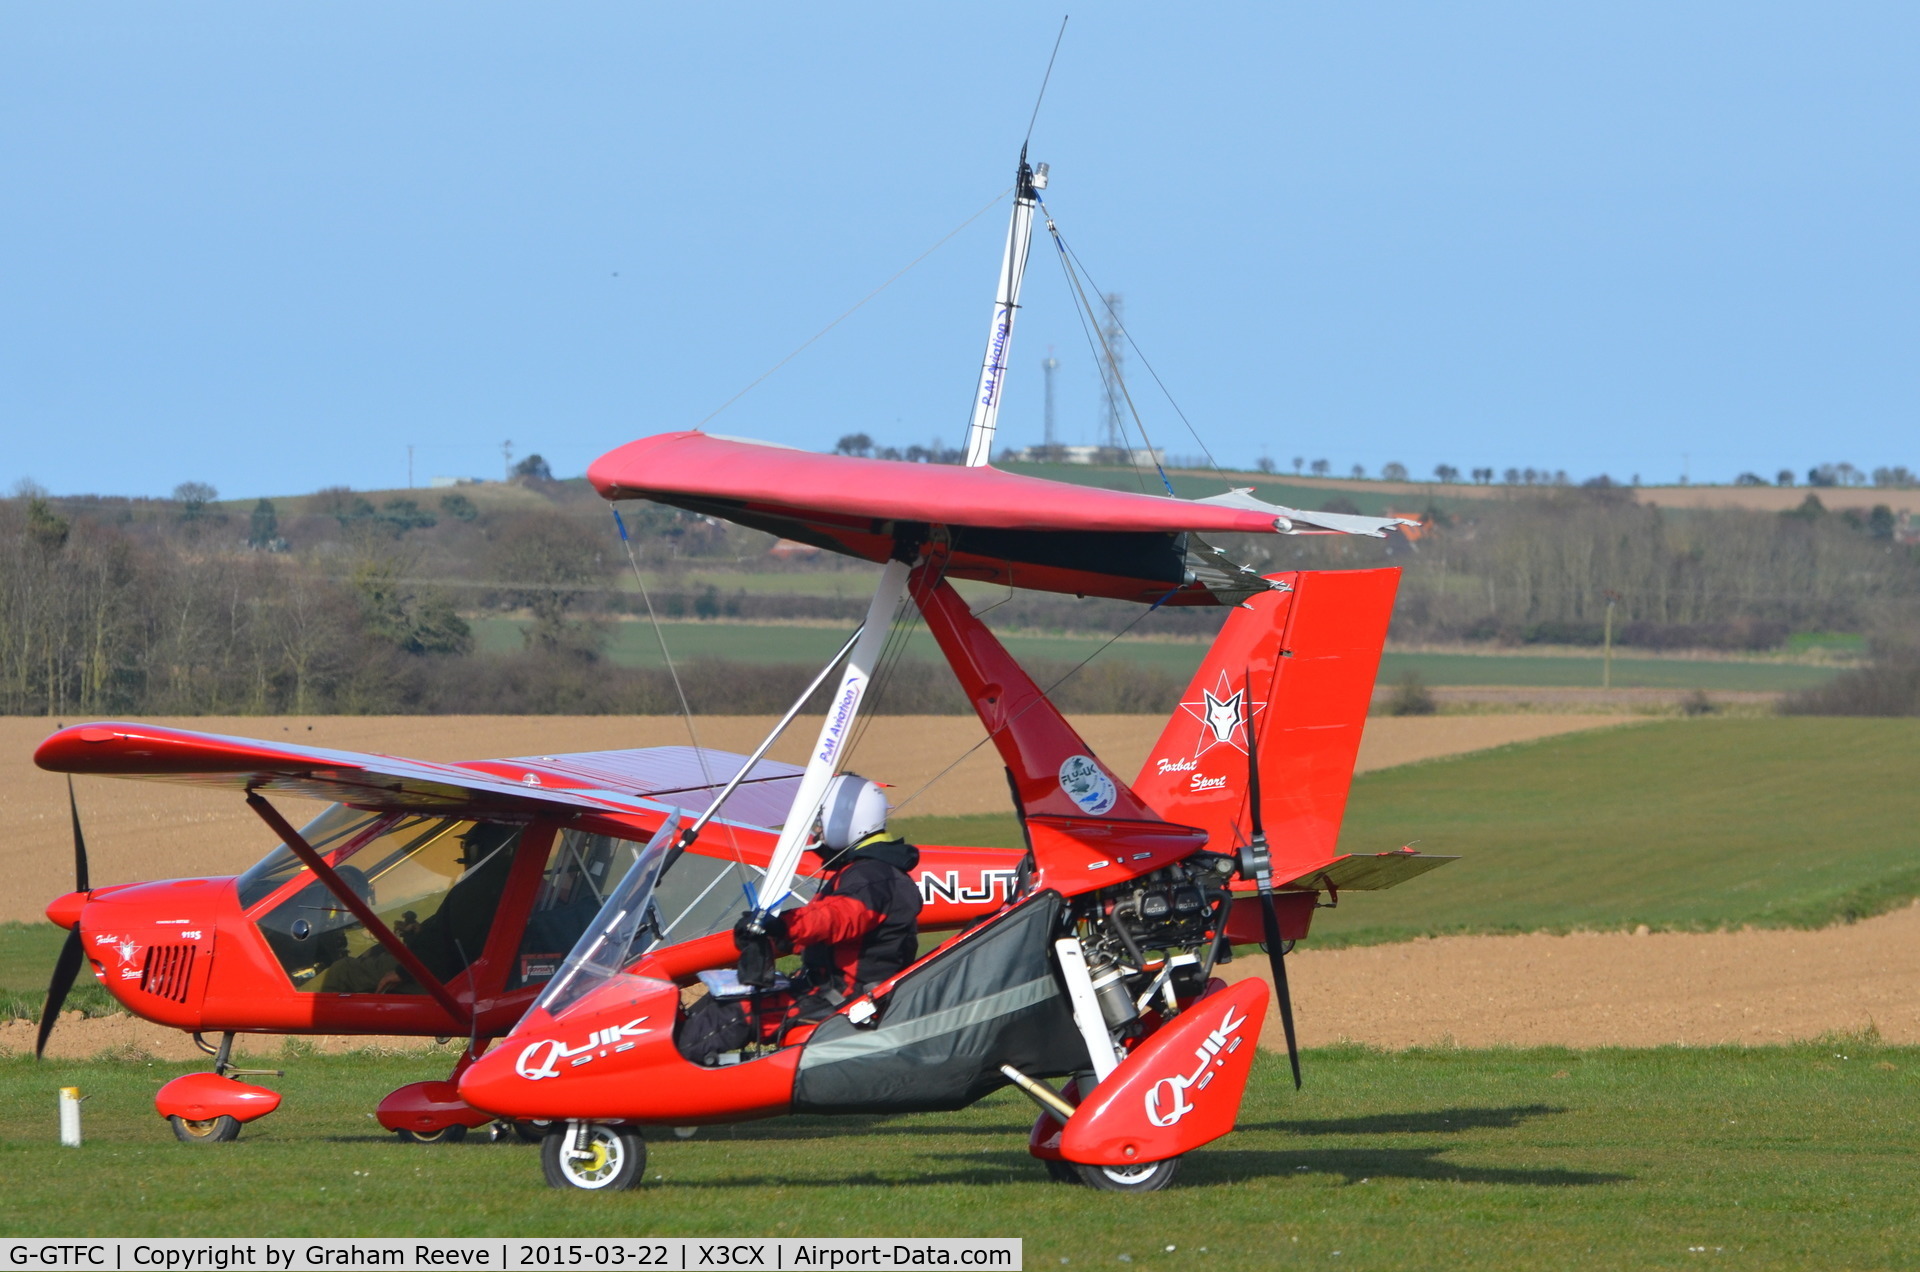 G-GTFC, 2006 P&M Aviation Pegasus Quik C/N 8184, Just landed at Northrepps.